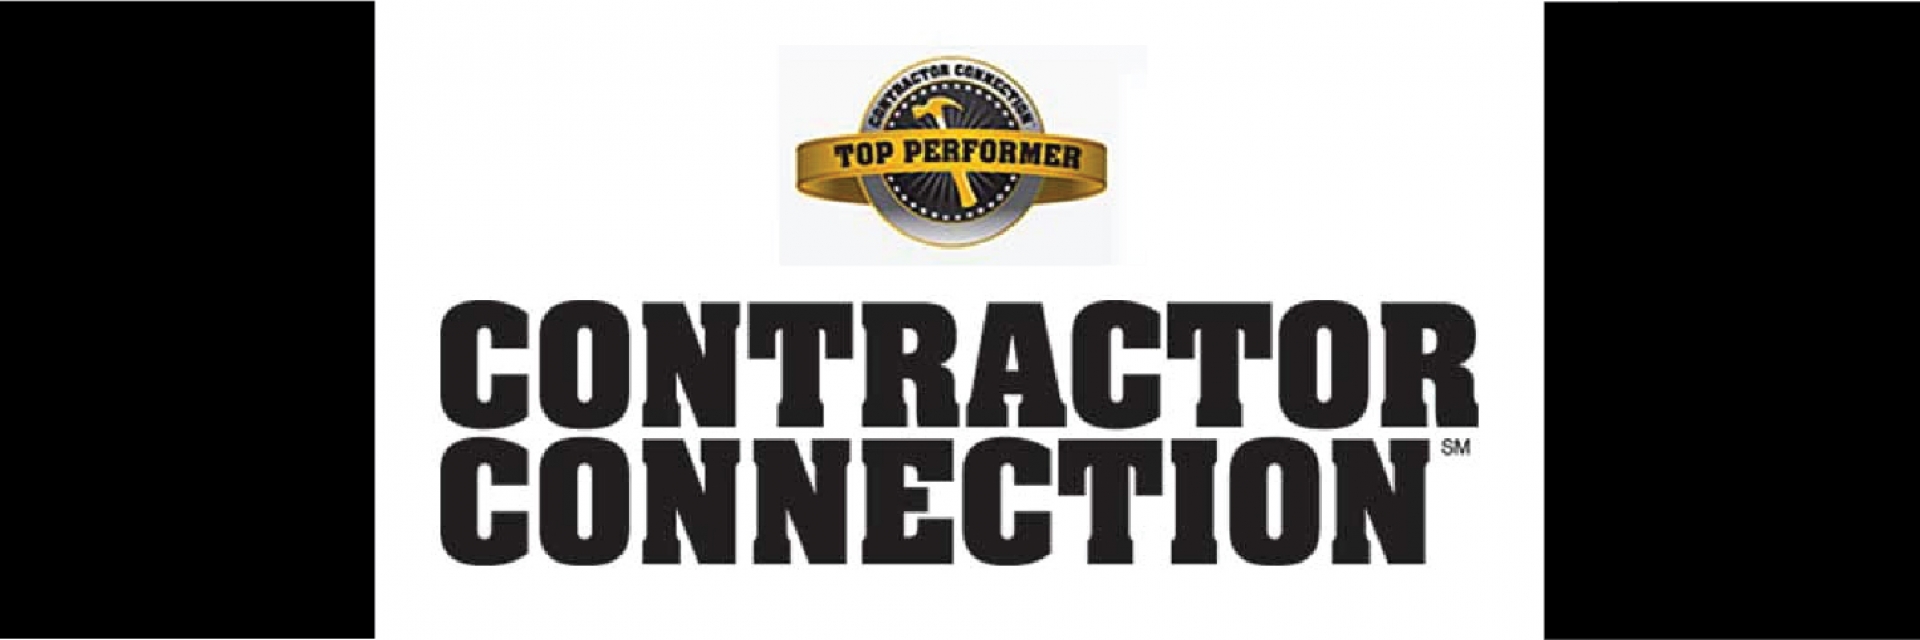 Contractor Connection Top Performer logo